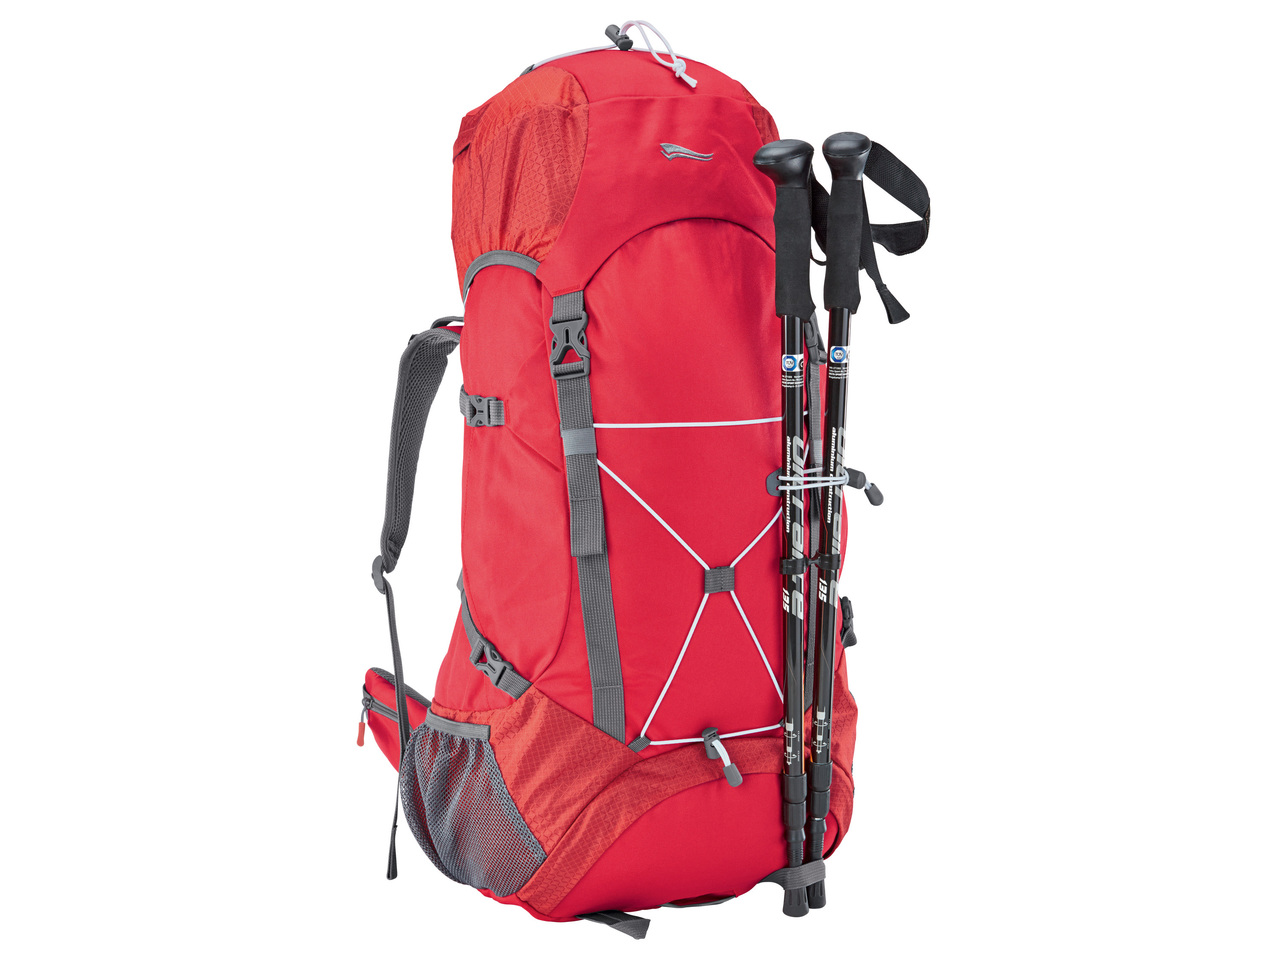 CRIVIT 60L Travel Backpack